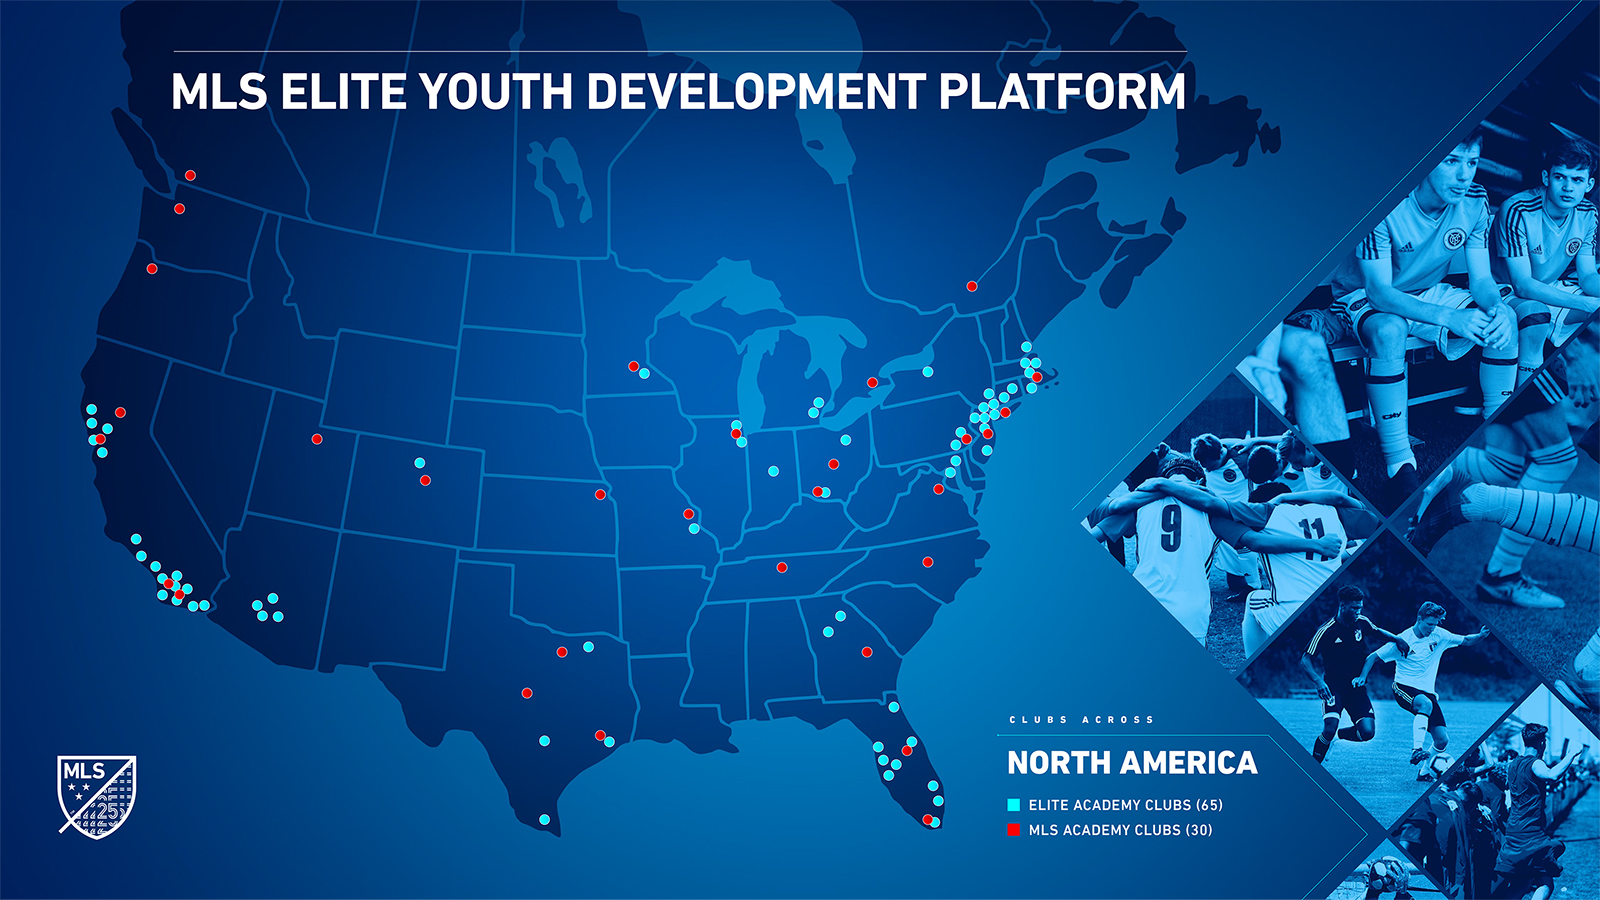 MLS Elite Youth Player Development Platform Map (MLS Communications)